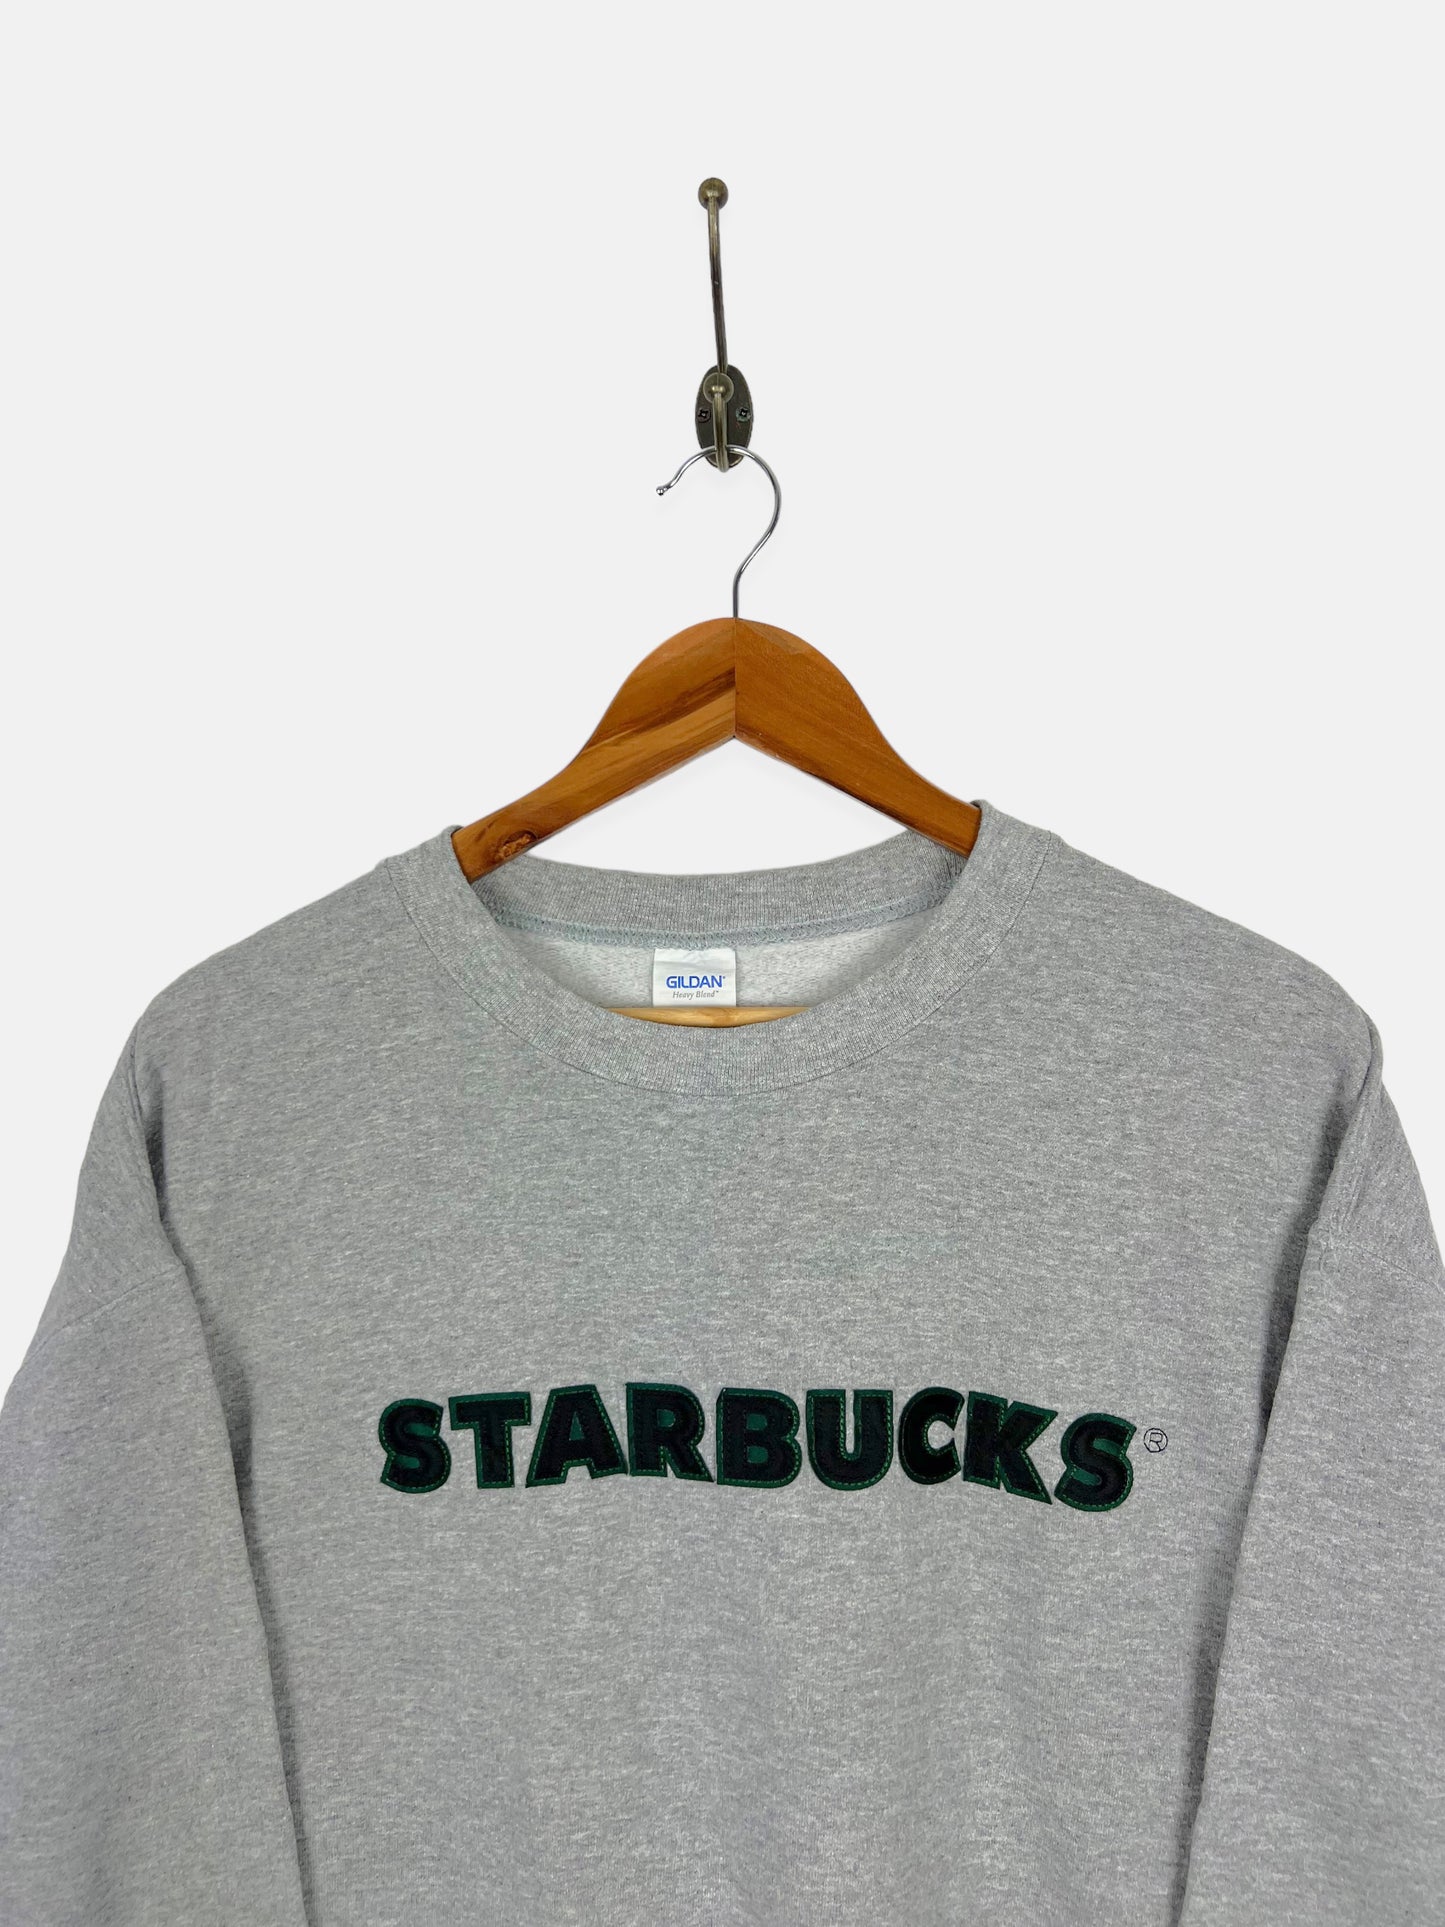 90's Starbucks Vintage Sweatshirt Size M-L